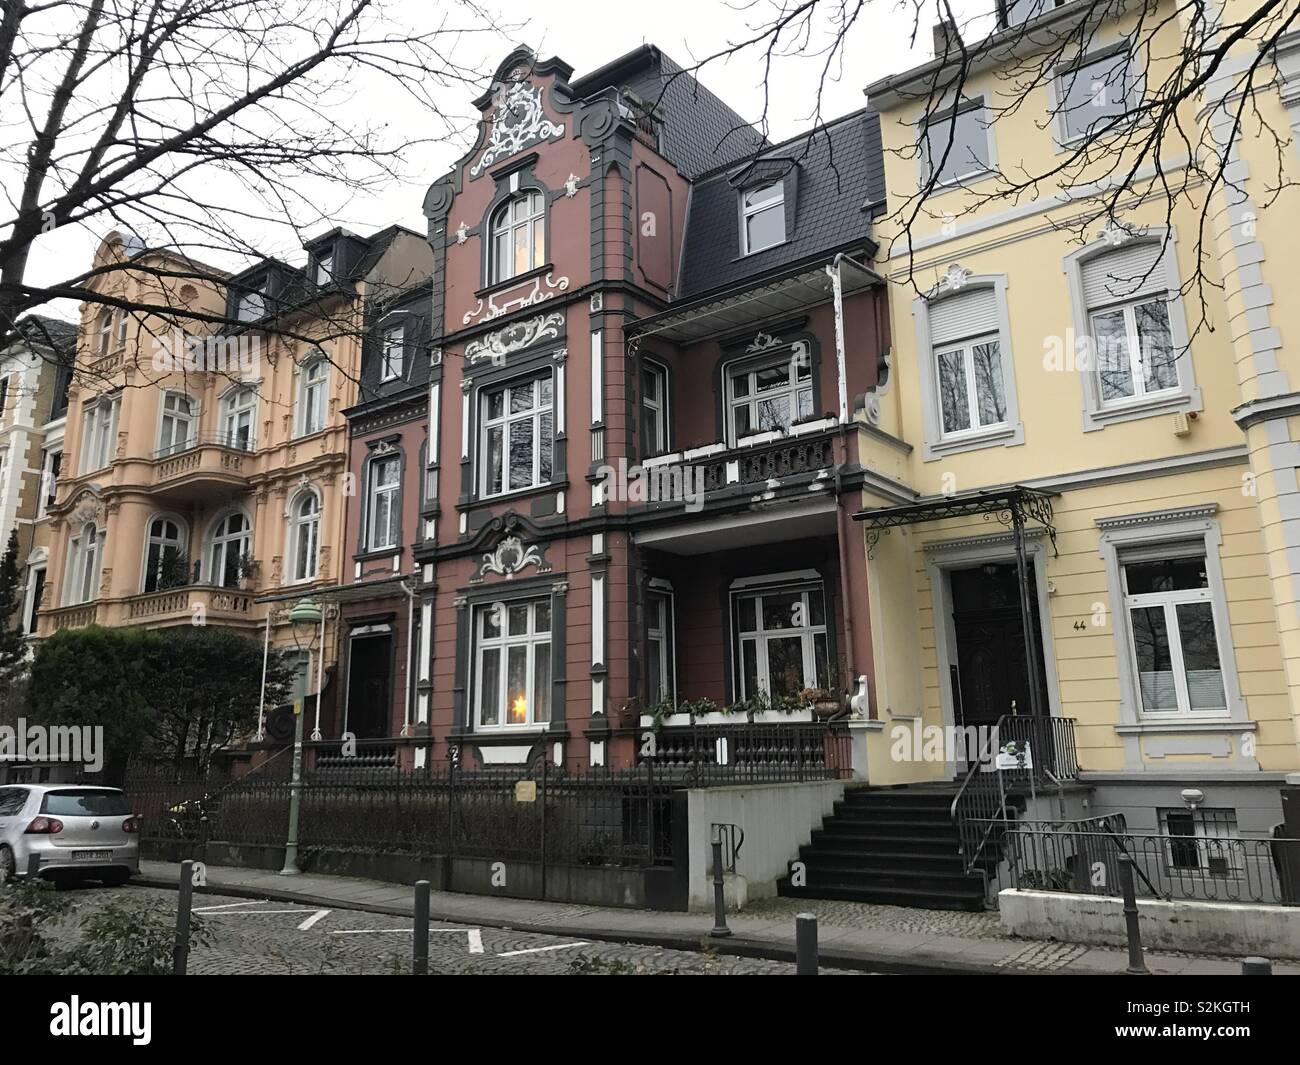 Houses in Bonn, Germany Stock Photo